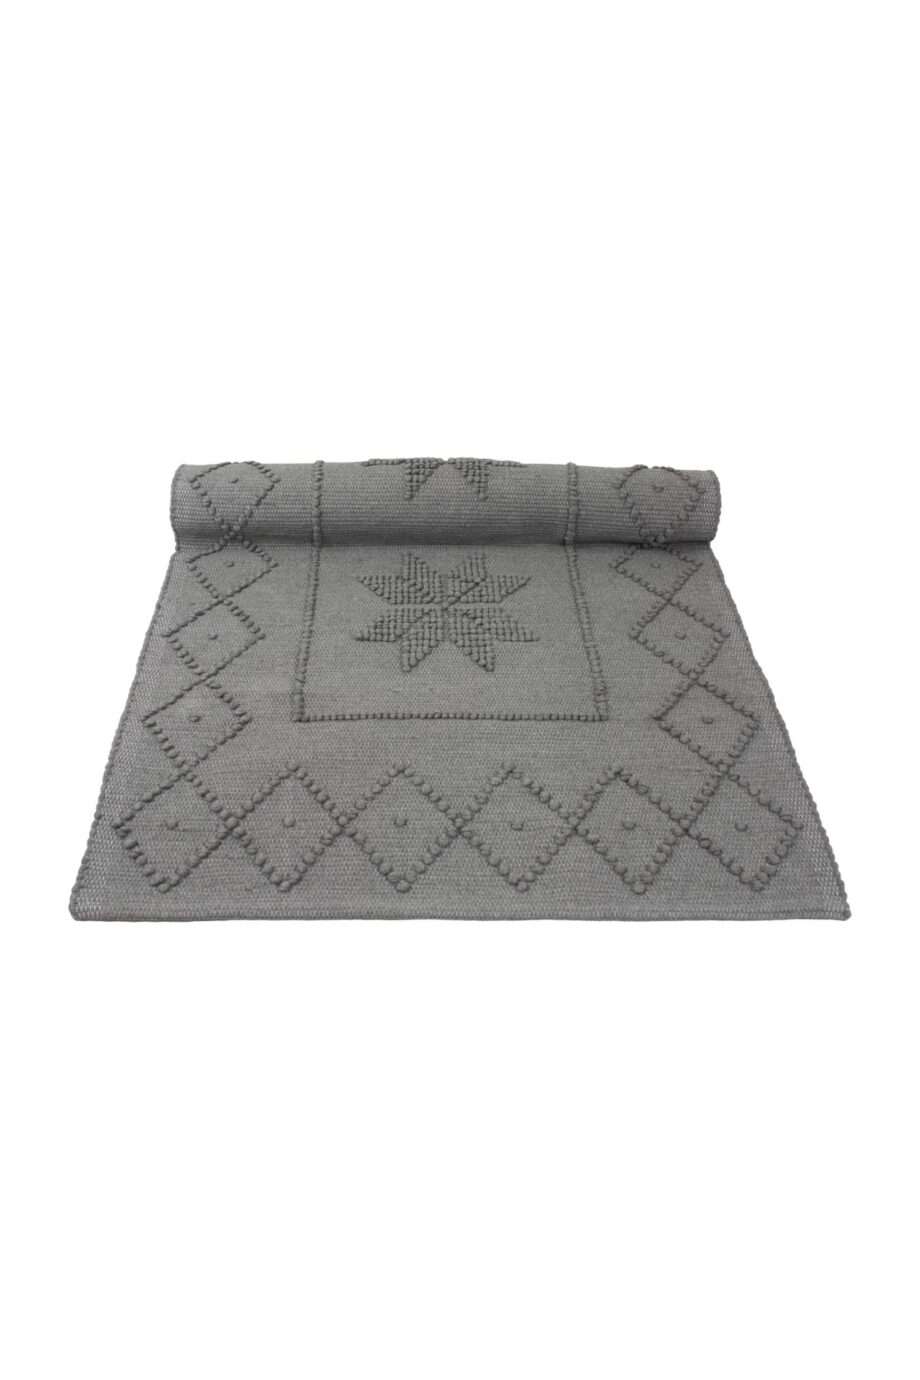 star grey woven cotton floor mat small